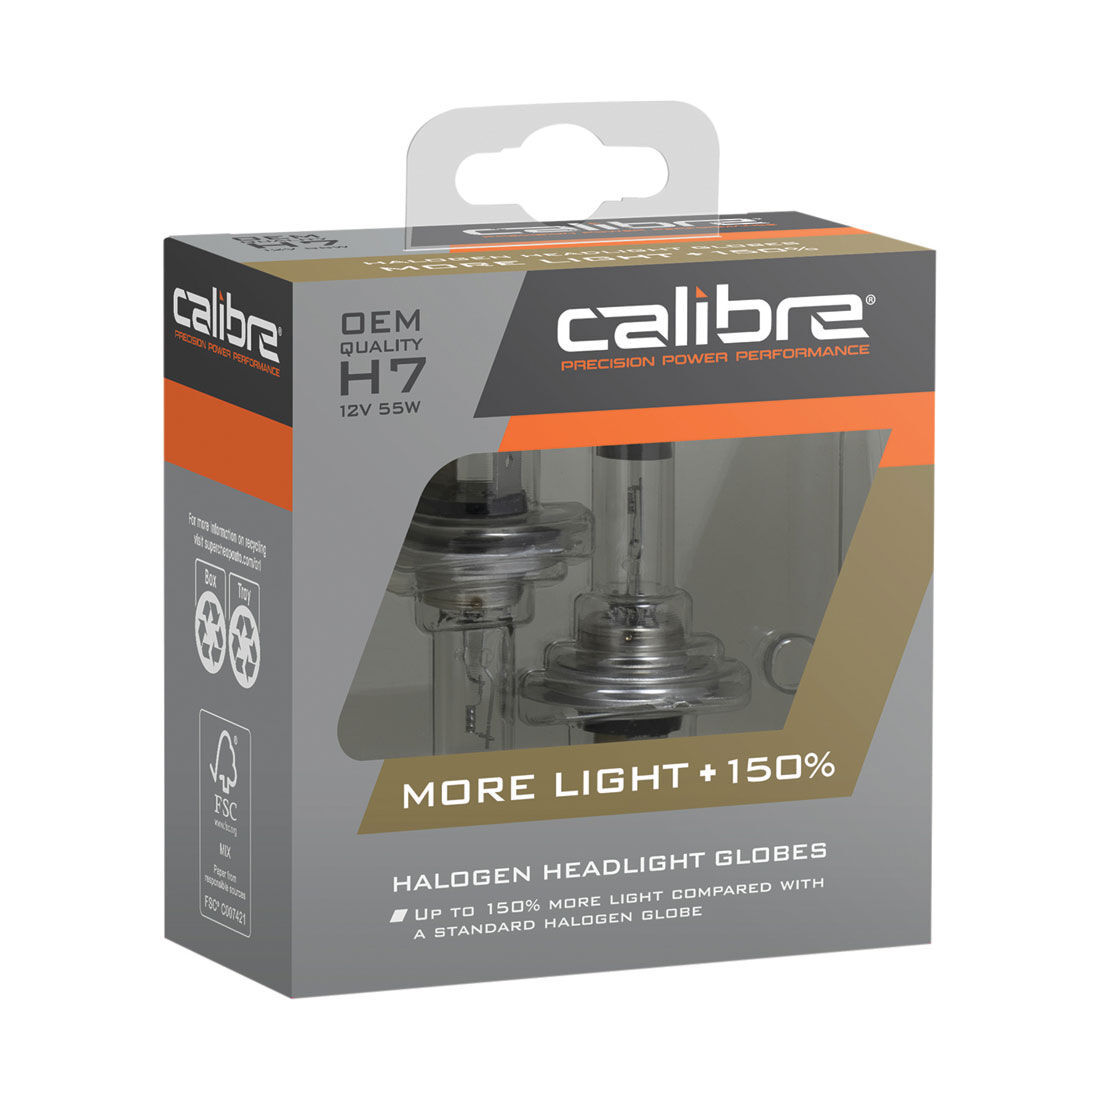 Calibre Plus 150 Headlight Globes - H7, 12V 55W, CA150H7, , scaau_hi-res